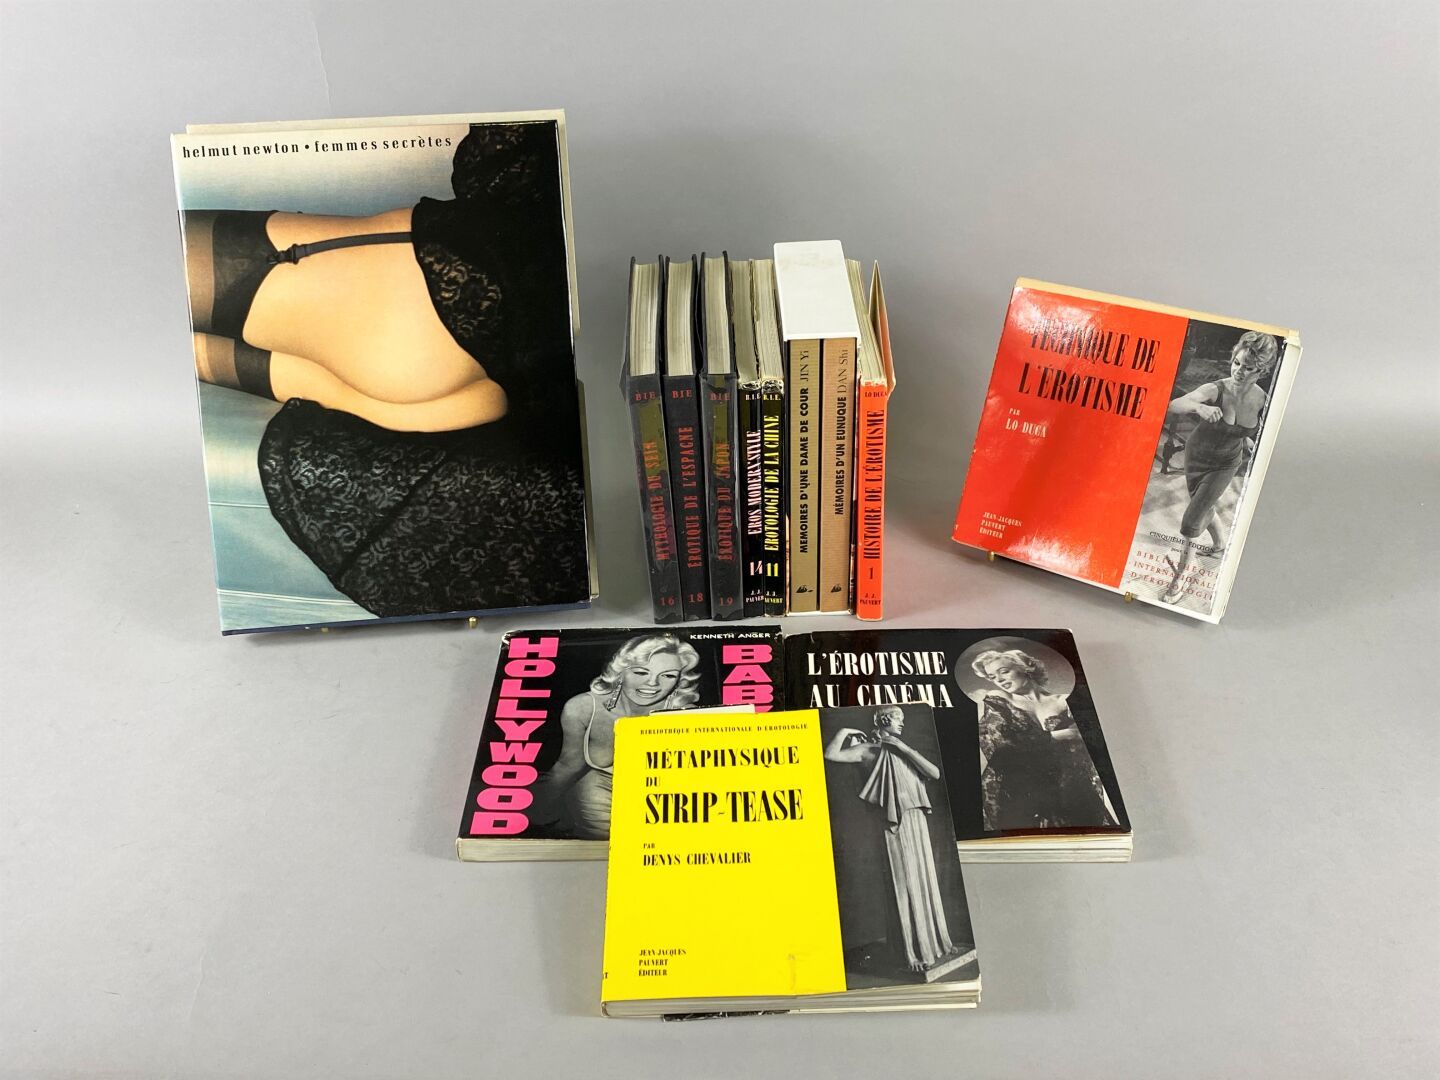 Null 色情主义。

一套13本书。

包括赫尔穆特-牛顿（Helmut Newton）、脱衣舞的形而上学、情色技术、电影中的情色主义等。